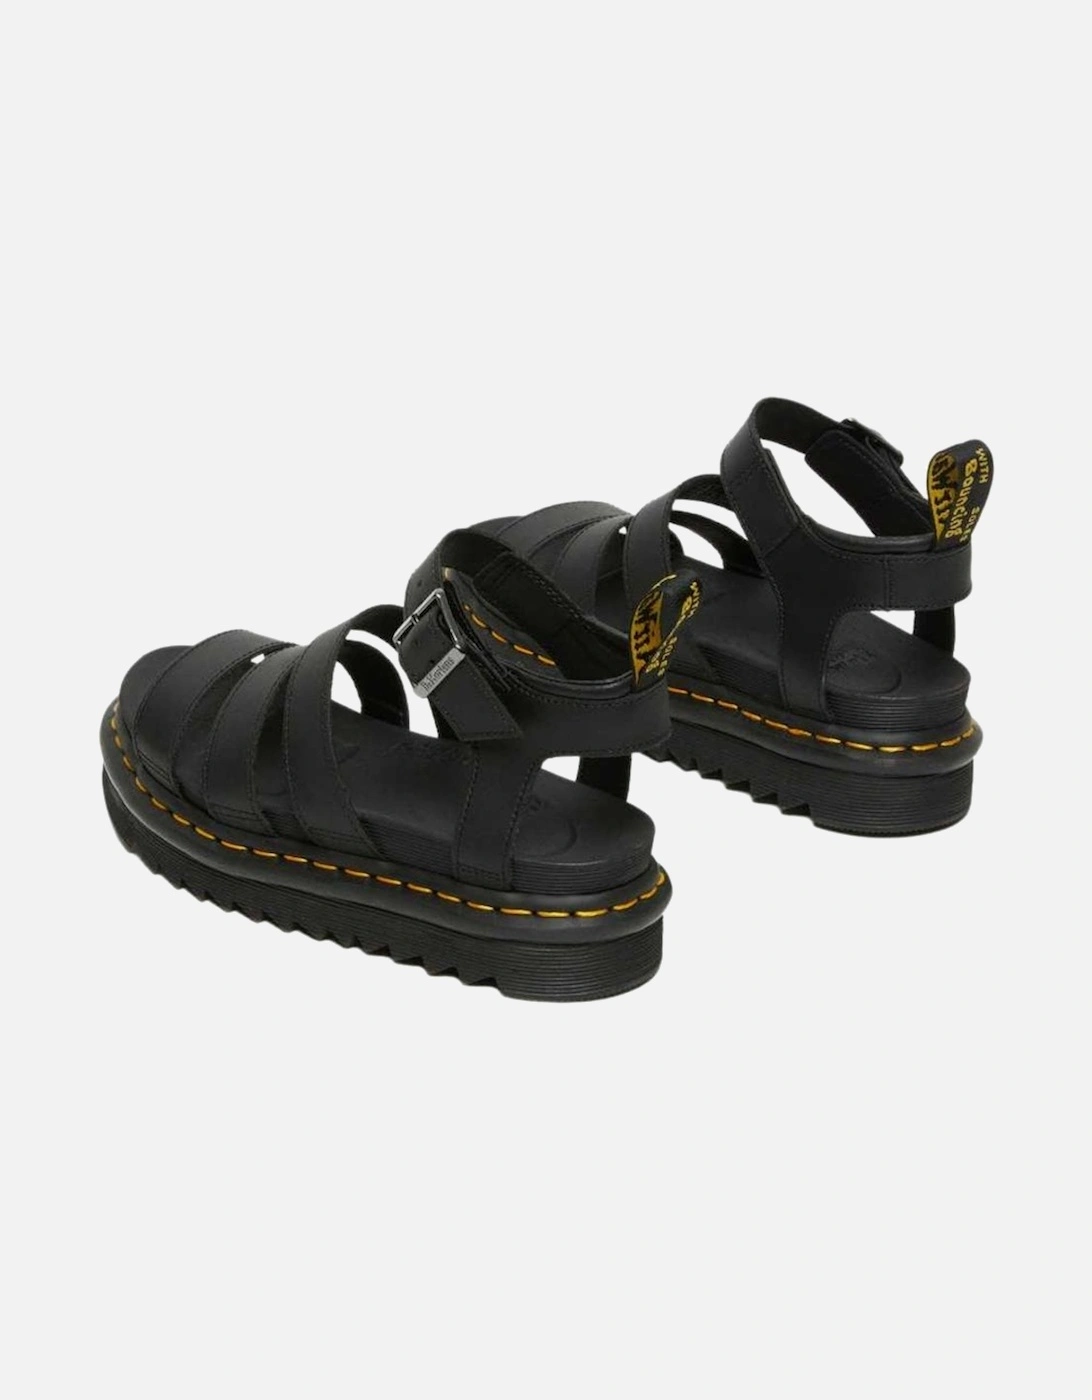 Blaire Hydro Sandal - Black